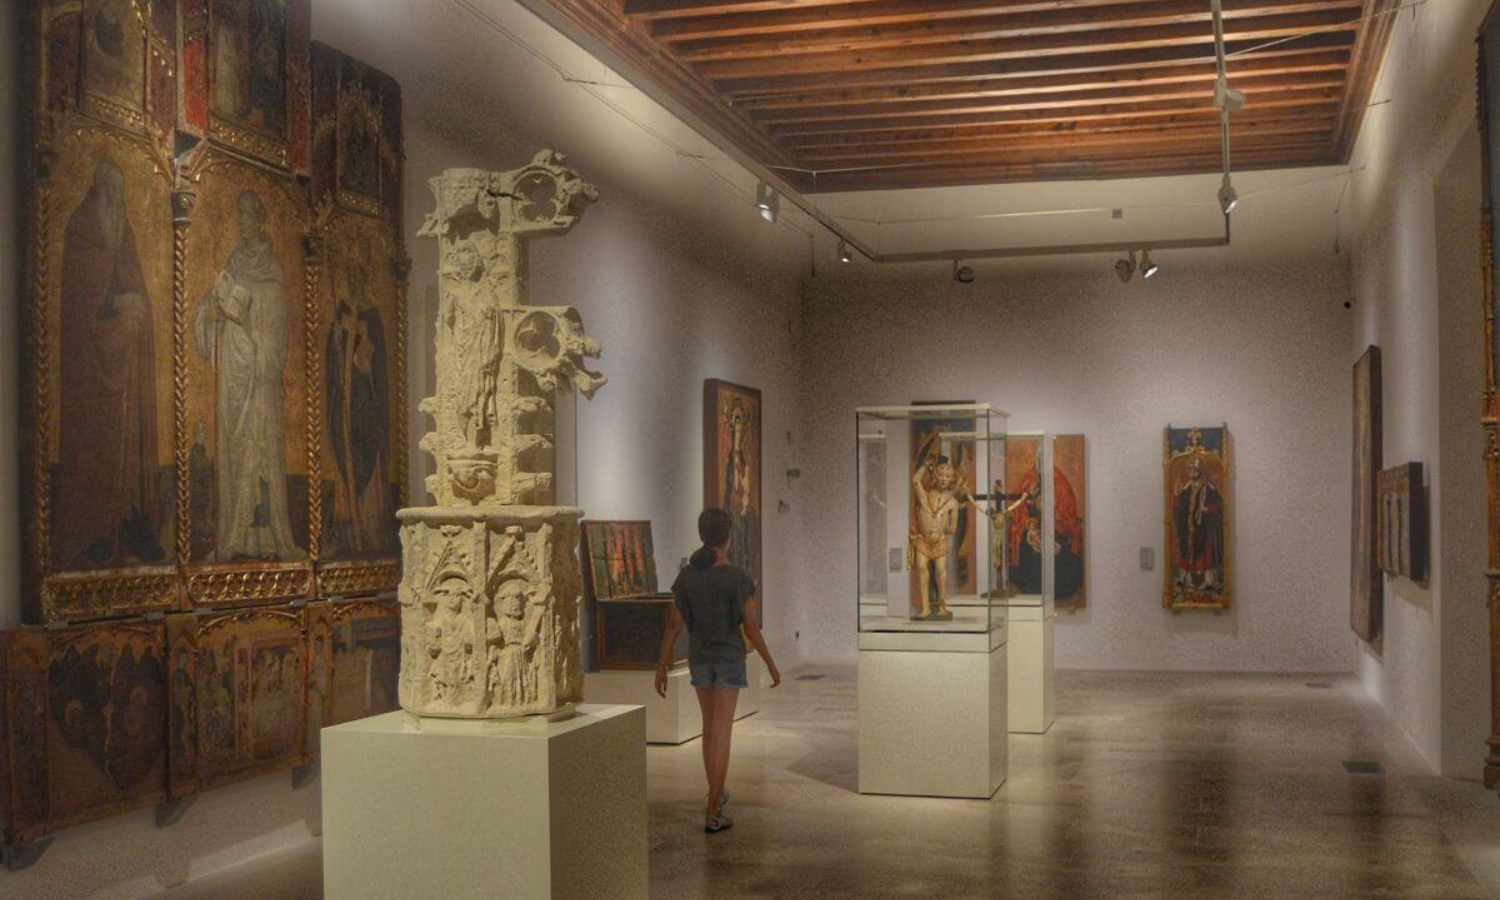 NAKAR HOTEL MALLORCA Palma Guide - Museums in Palma Museu Mallorca - Créditos Turisme Petit